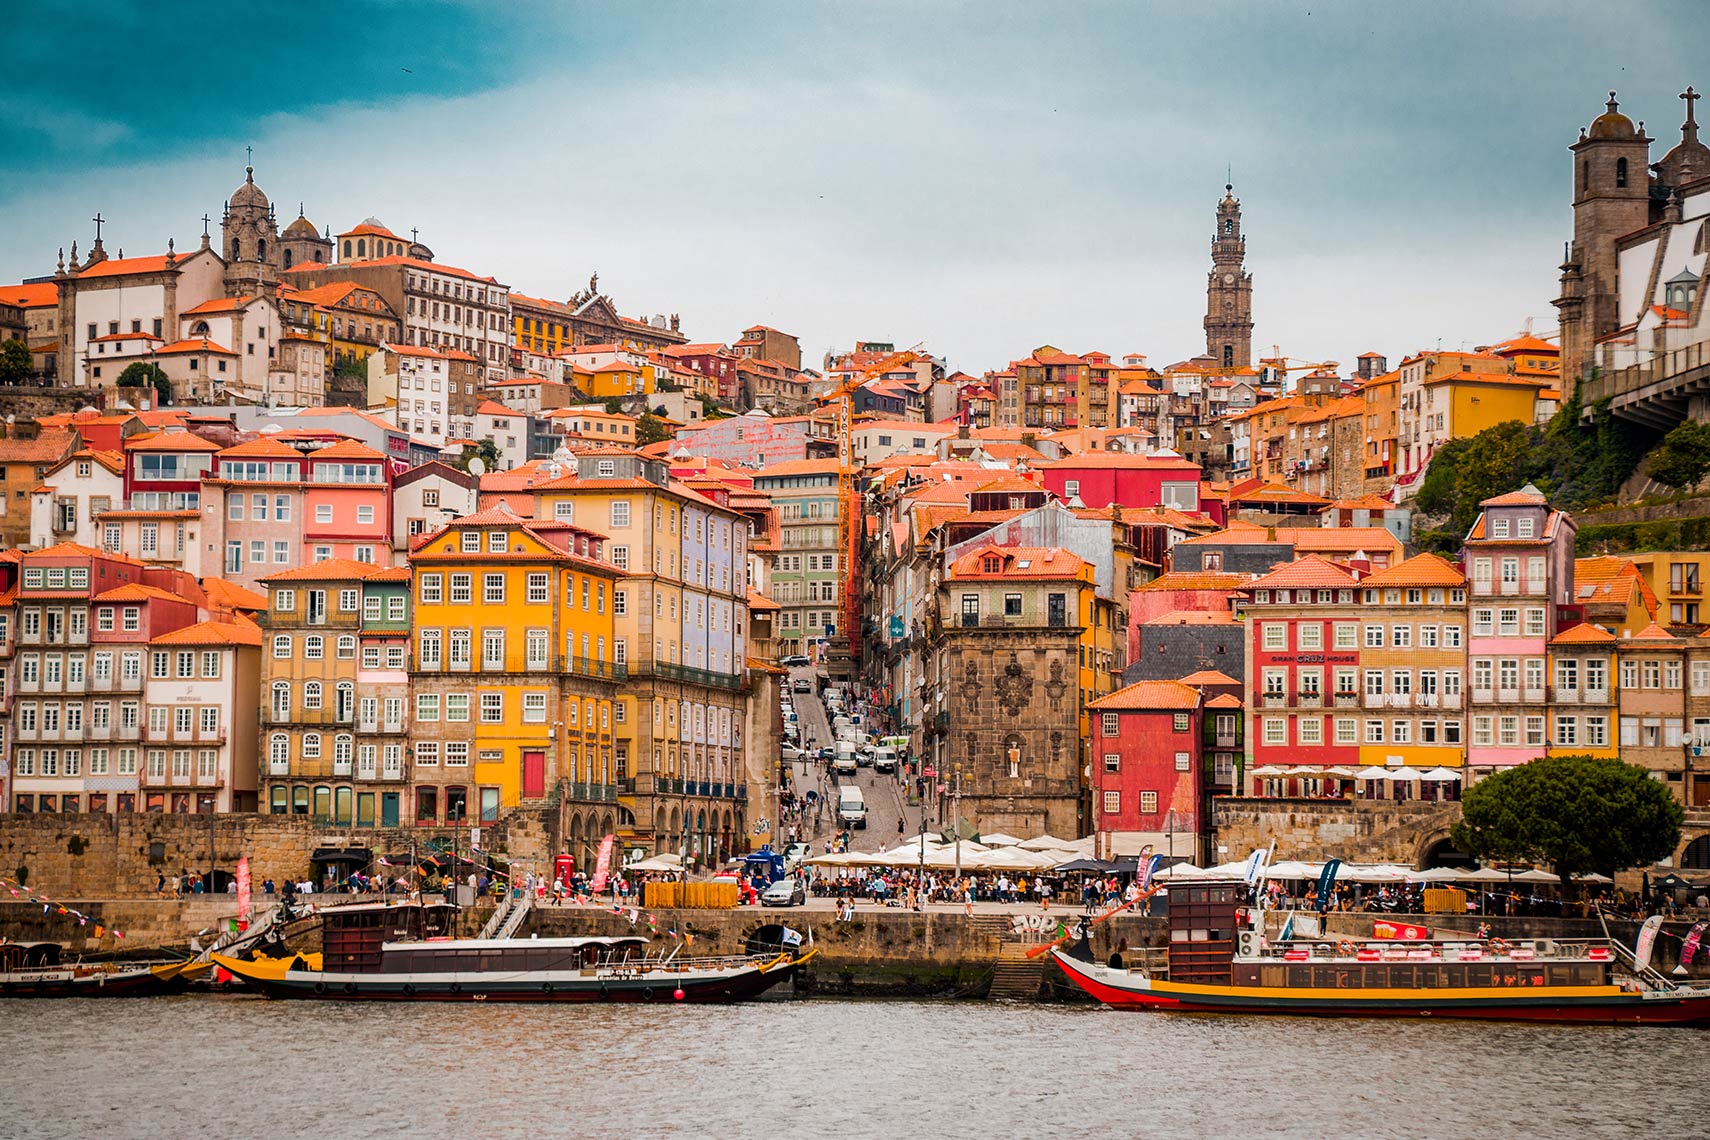 The Ribeira area of Porto (Oporto) along the Douro river. 